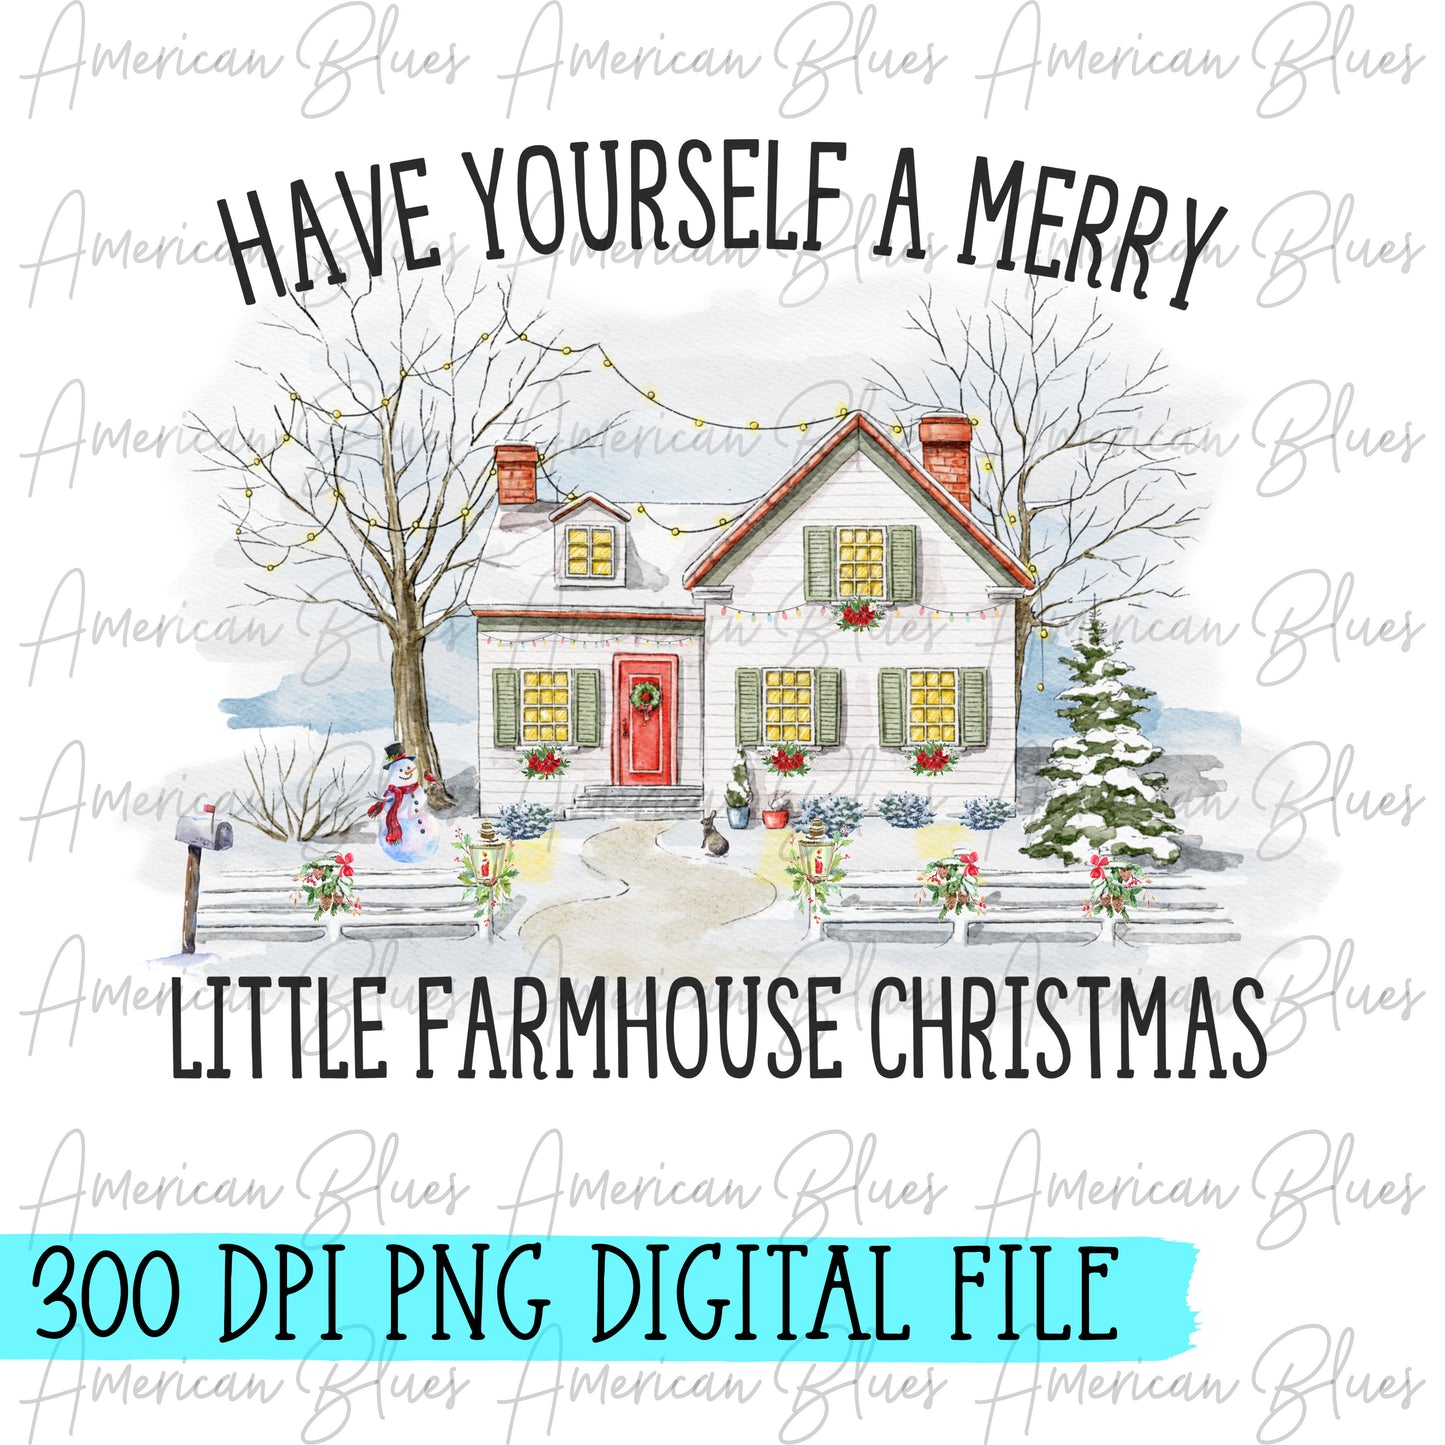 Have yourself a merry little farmhouse Christmas